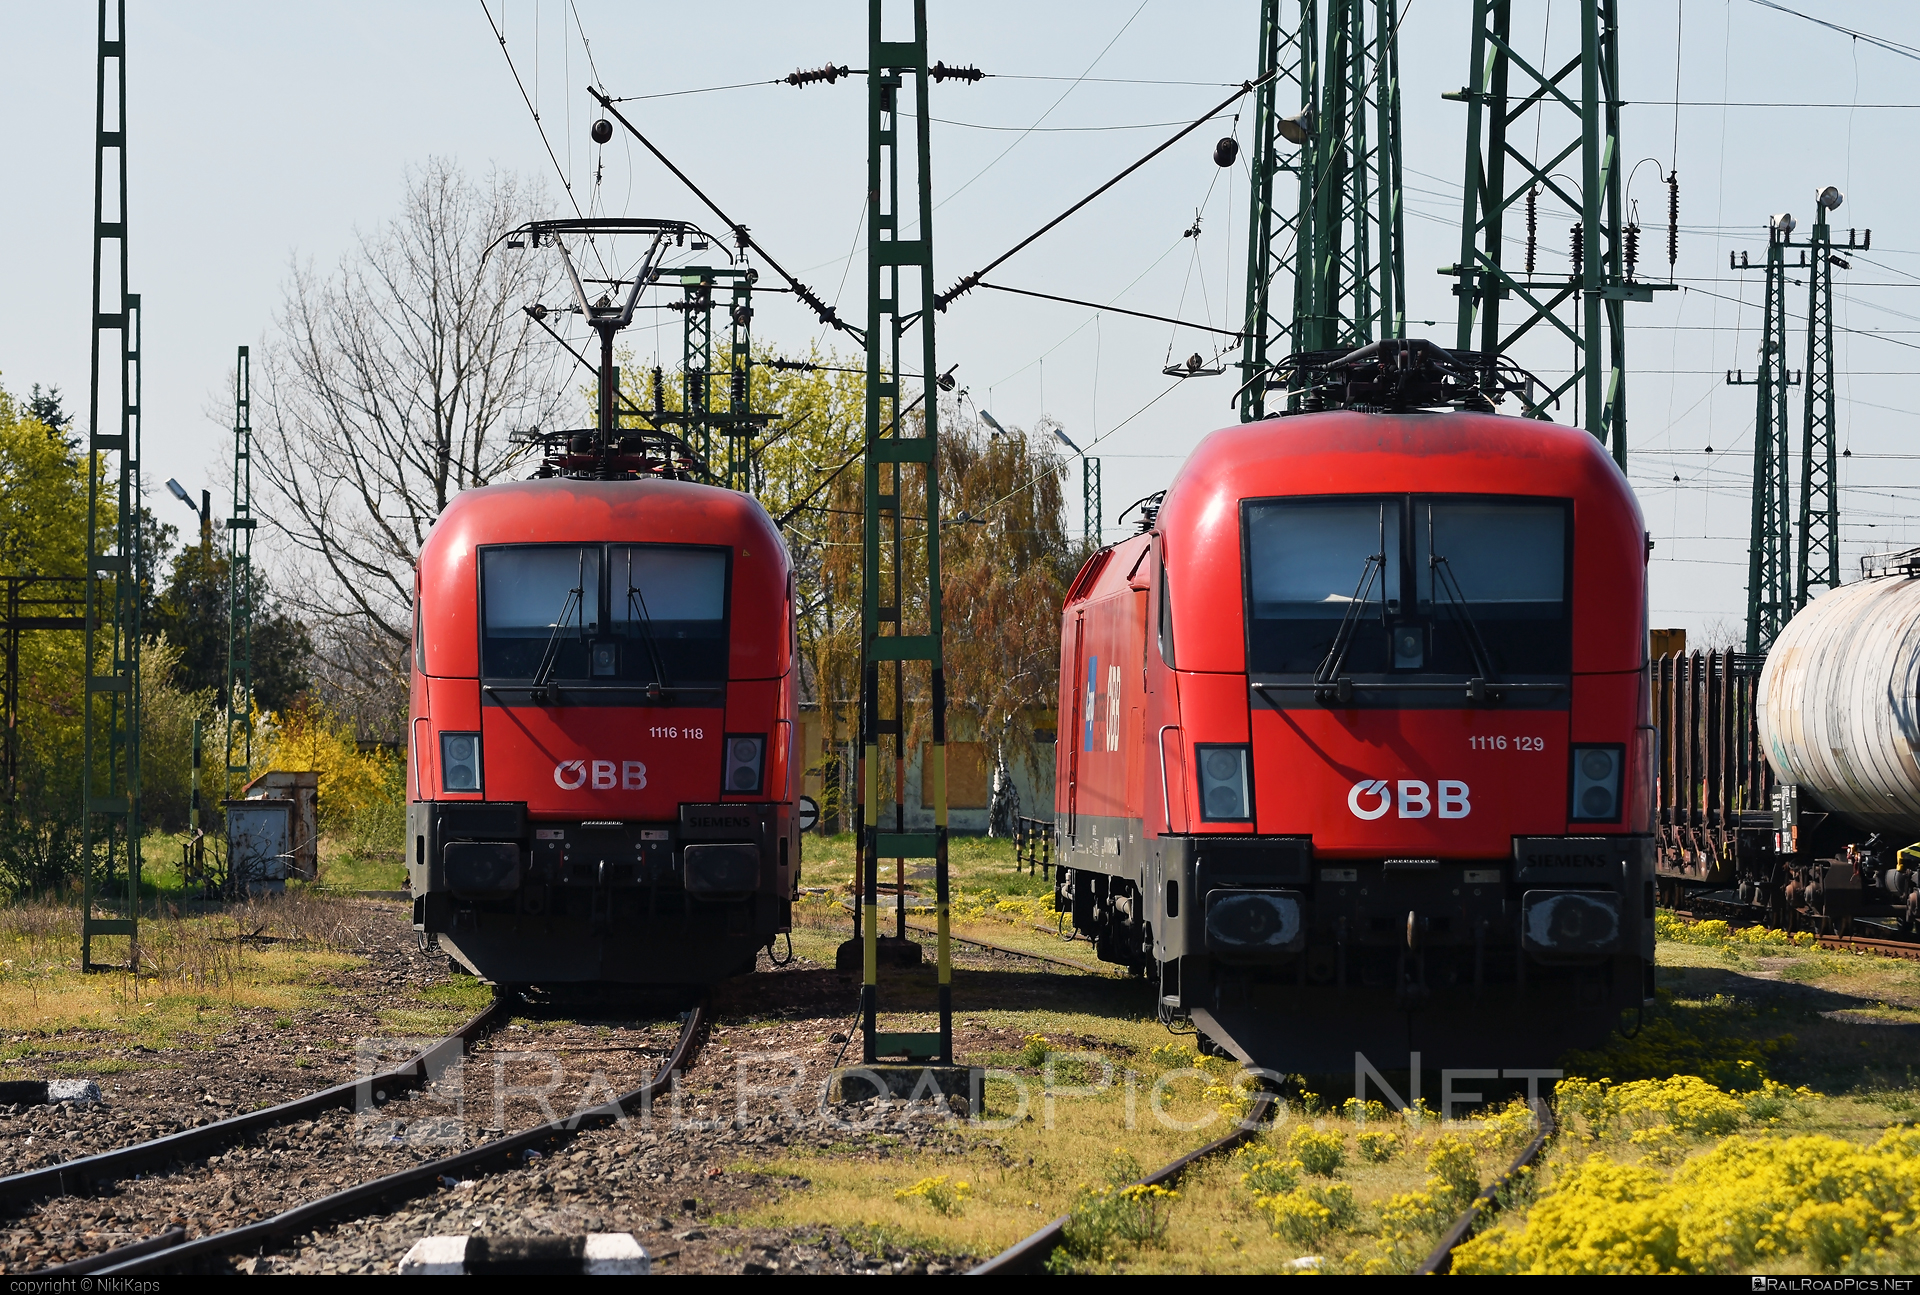 Siemens ES 64 U2 - 1116 129 operated by Rail Cargo Hungaria ZRt. #es64 #es64u2 #eurosprinter #obb #osterreichischebundesbahnen #rch #siemens #siemensEs64 #siemensEs64u2 #siemenstaurus #taurus #tauruslocomotive